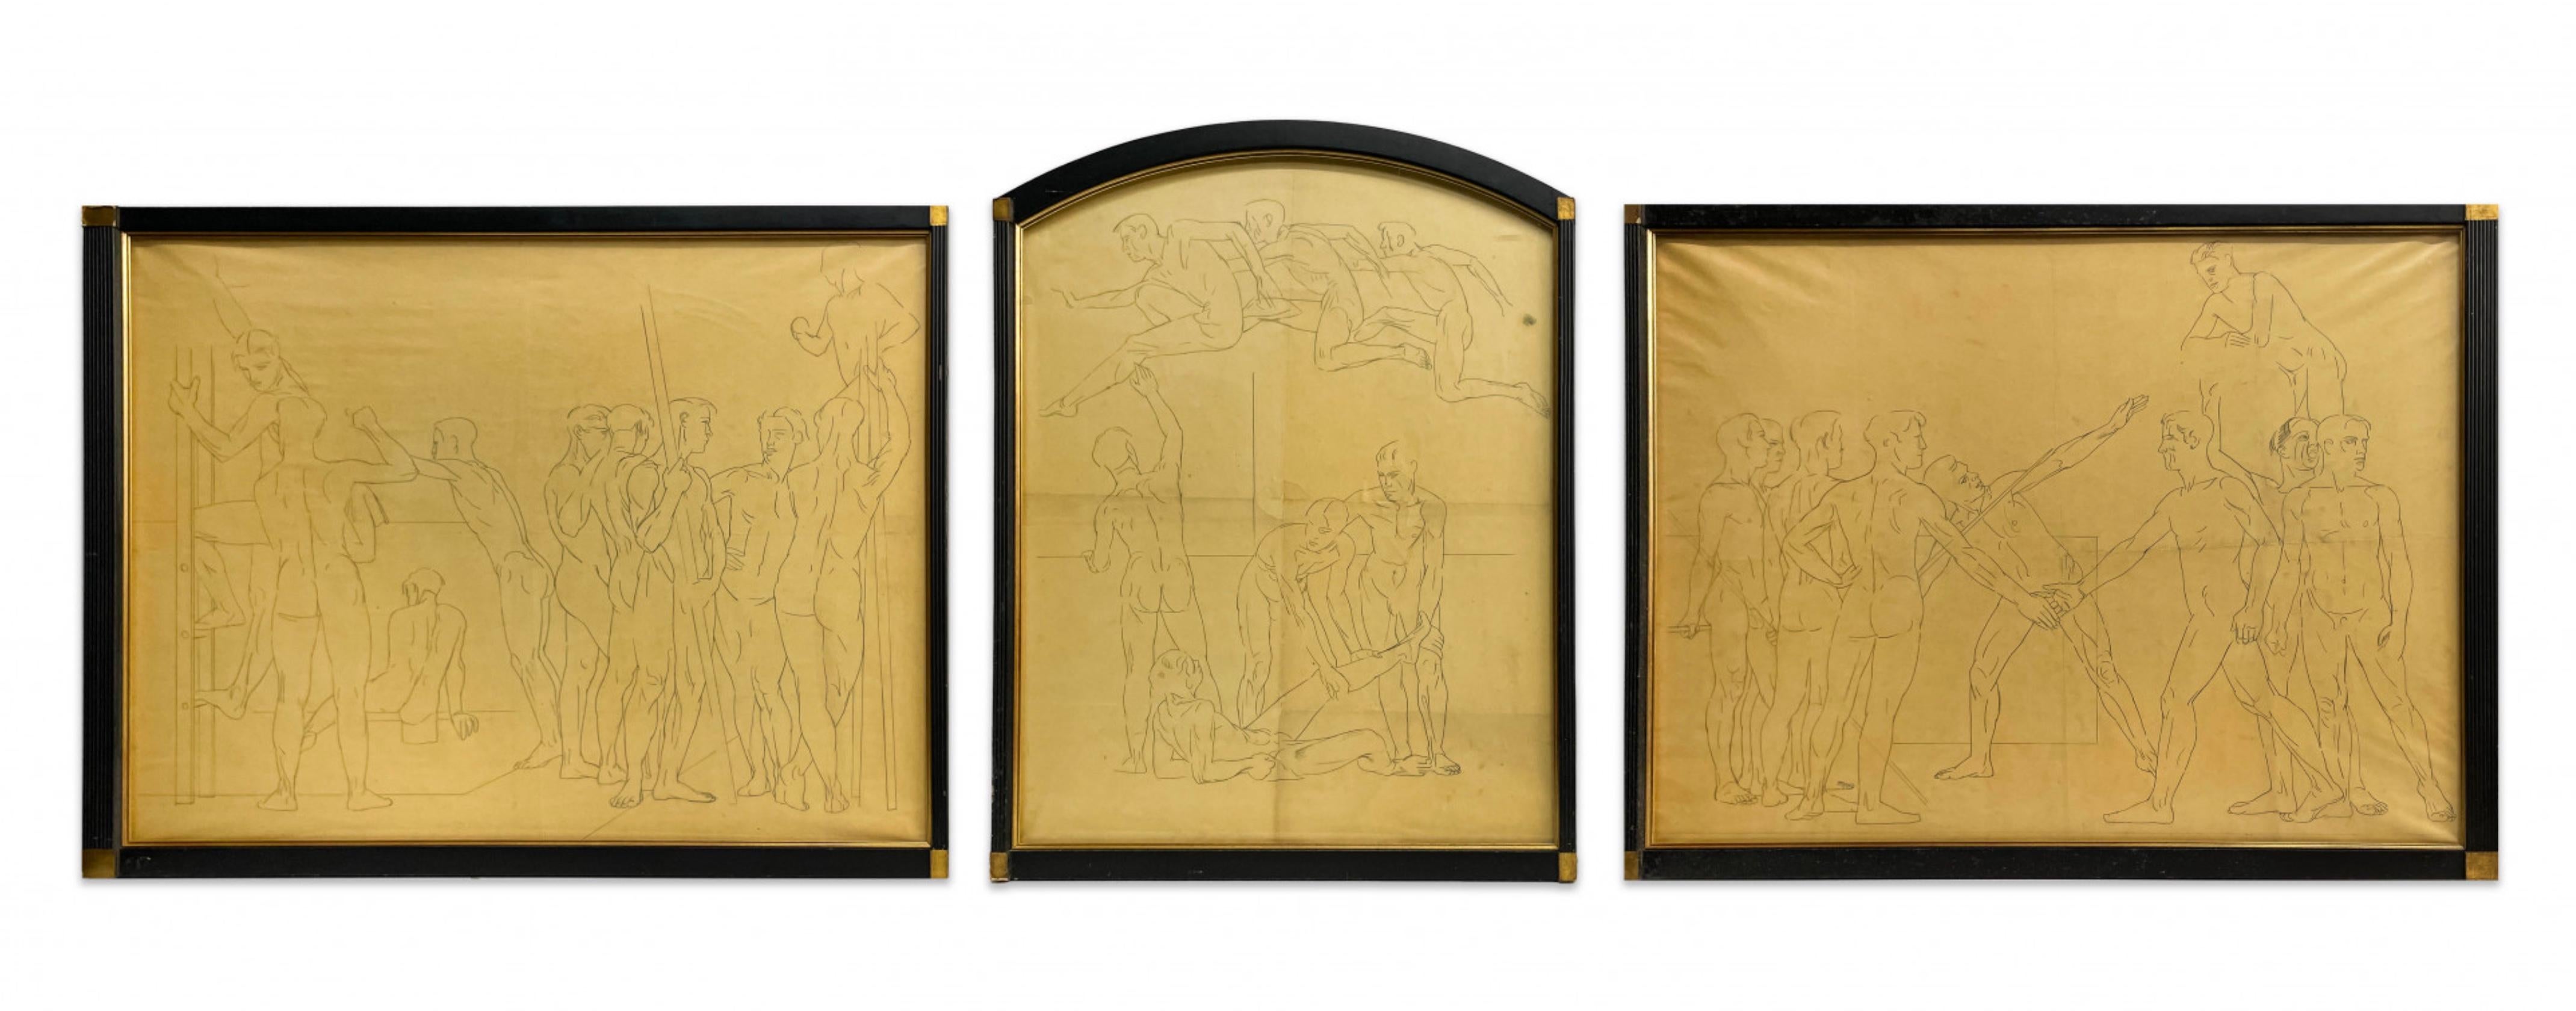 Figurative Art James Stroudley - Un triptyque : The Olympic Games, The Moderns British Drawing, Ancient Greek, Nude (Les Jeux Olympiques, le dessin moderne britannique, le nu).